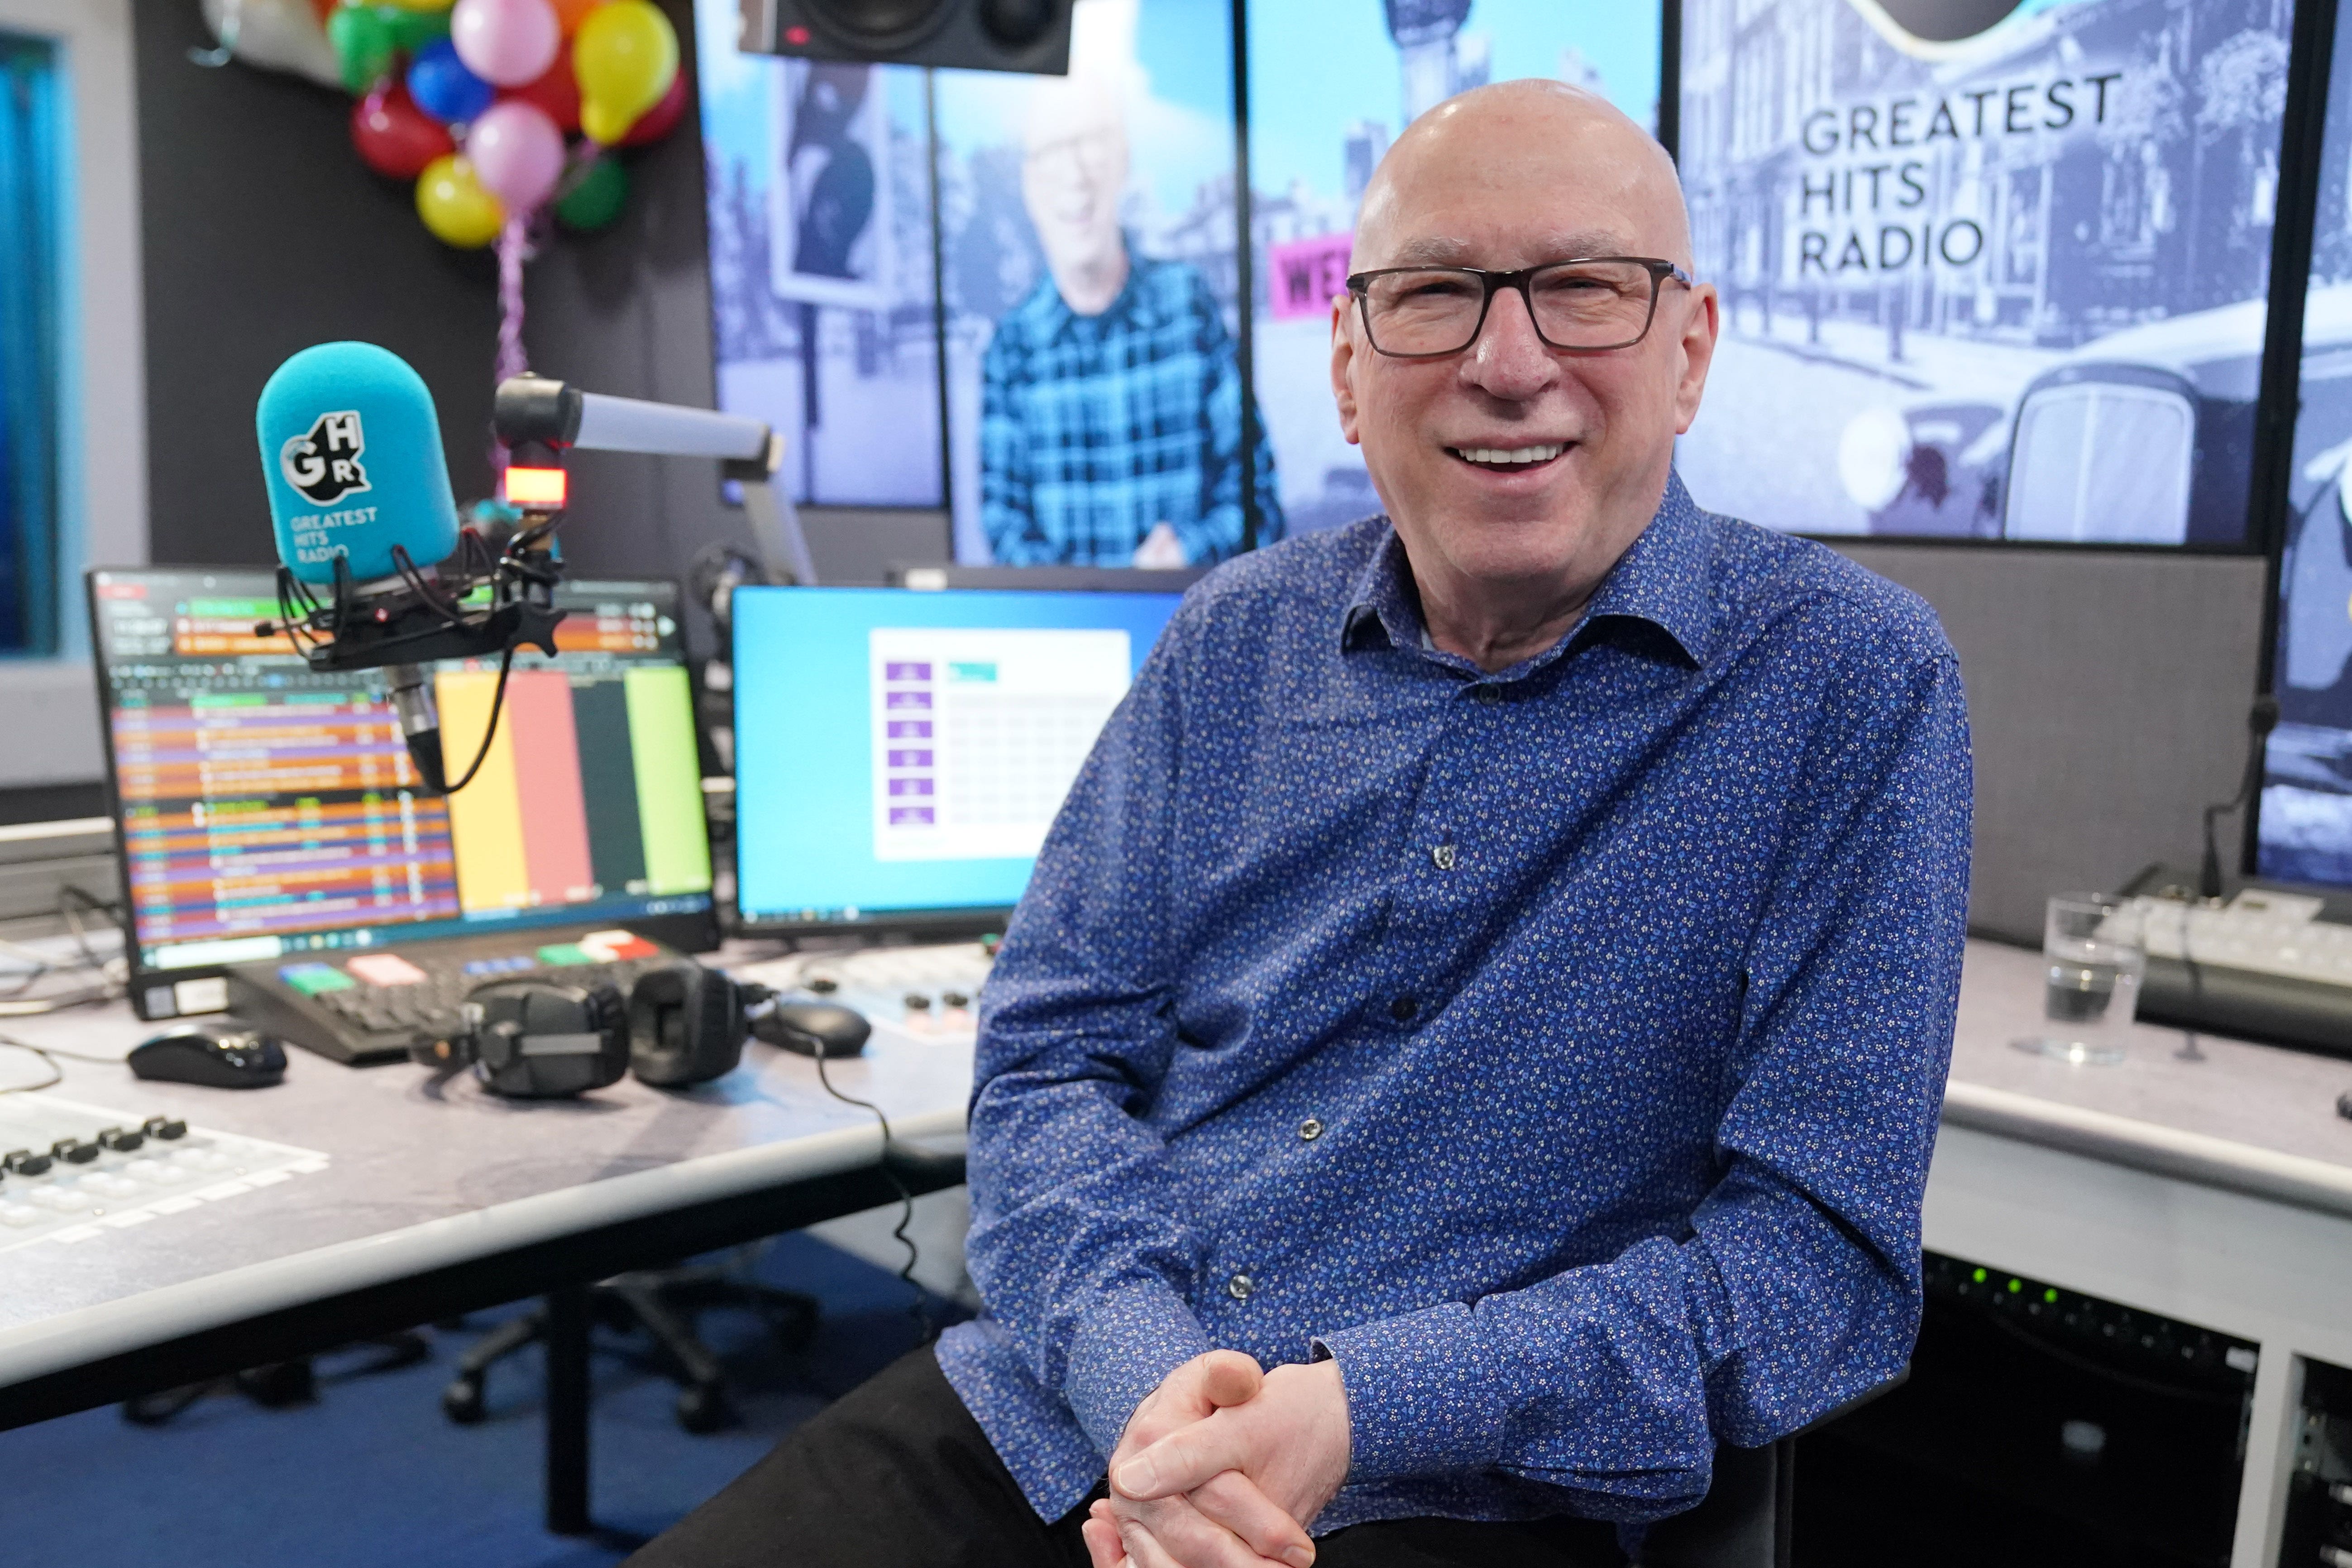 Radio presenter Ken Bruce in the Greatest Hits Radio studios in central London